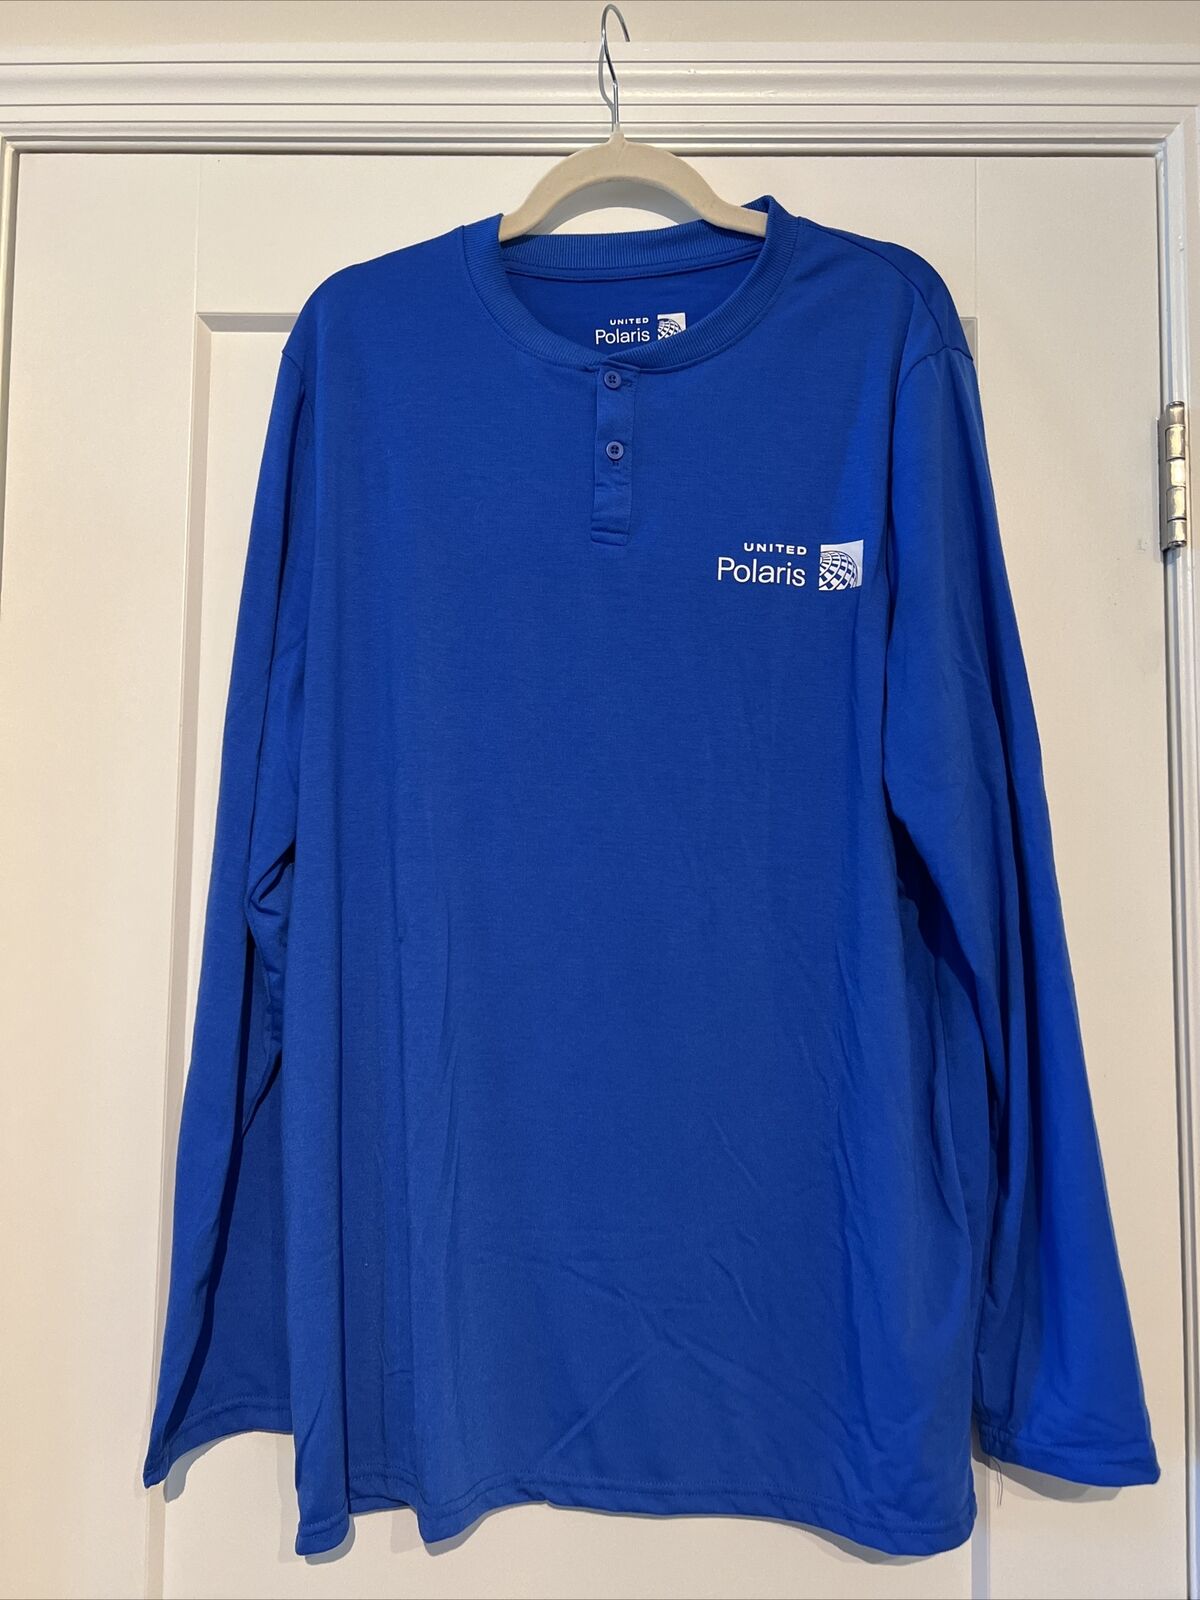 Royal Blue United Polaris Business Class Travel Pajamas Size L/XL Long Sleeve